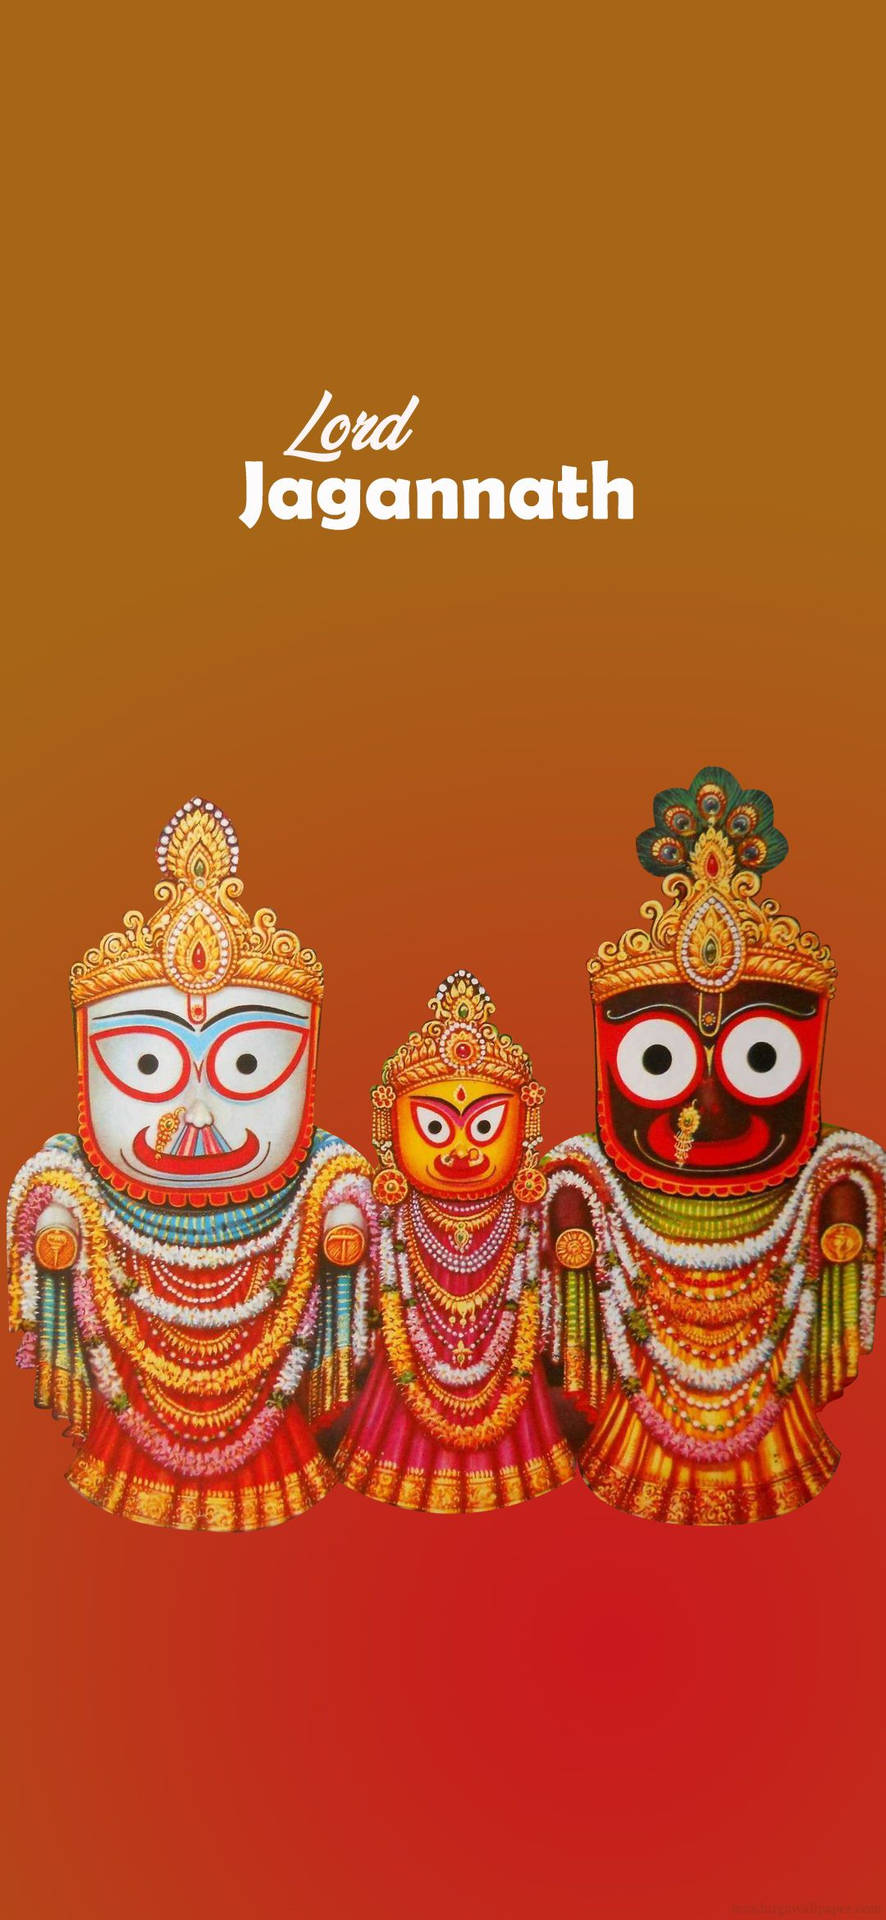 Jagannath With Hindu Gods Background